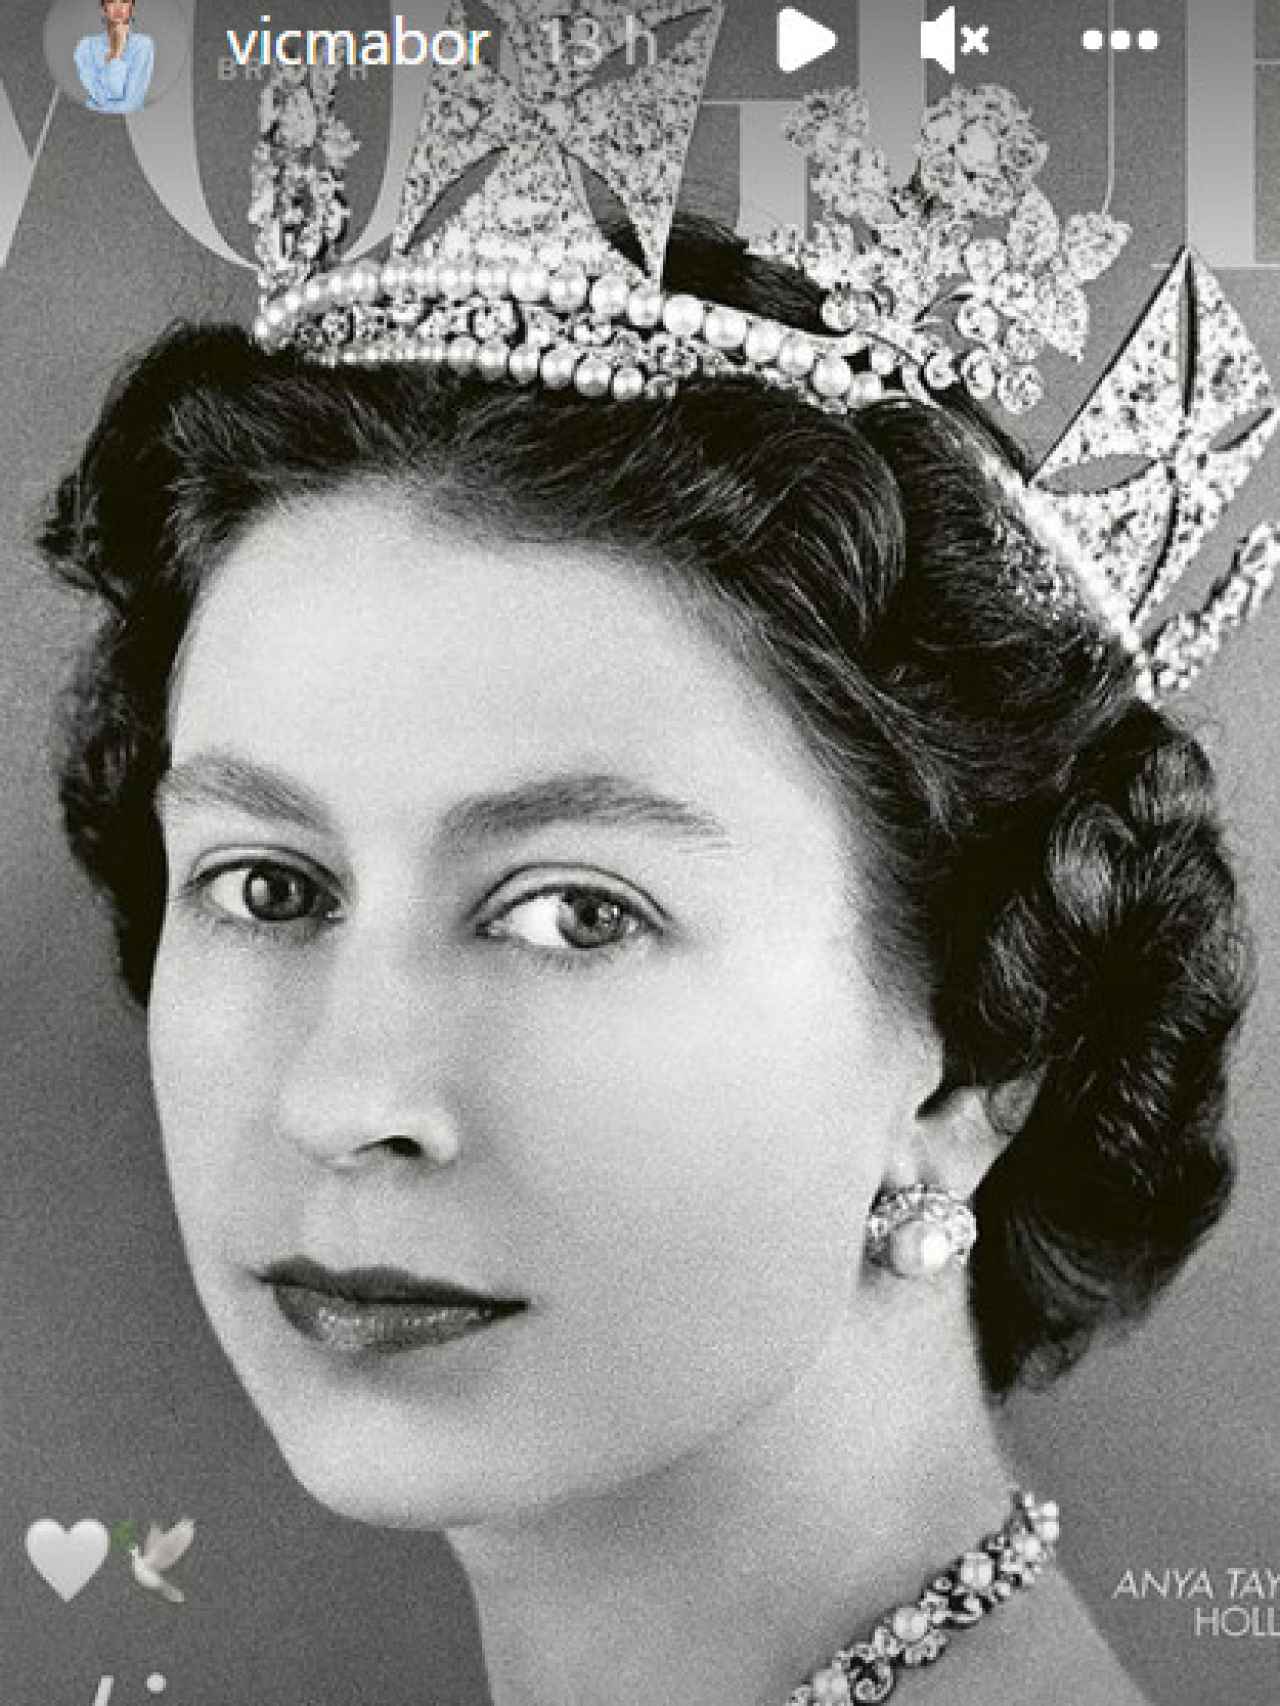 Victoria Federica se ha despedido de la reina Isabel II a través de sus 'stories' de Instagram.